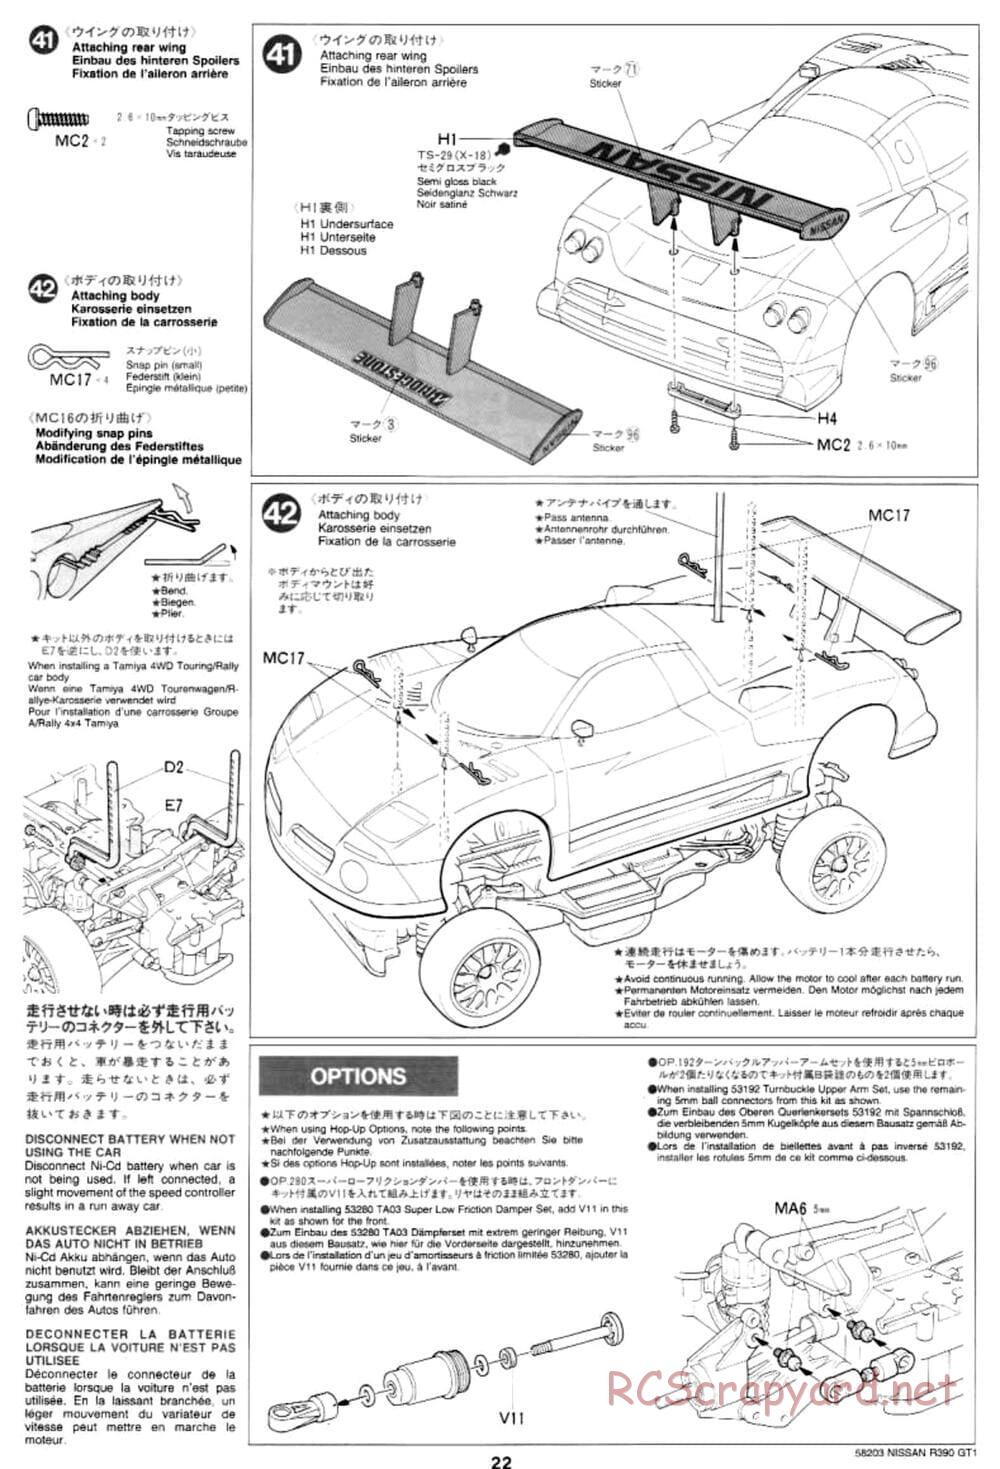 Tamiya - Nissan R390 GT1 - TA-03R Chassis - Manual - Page 22